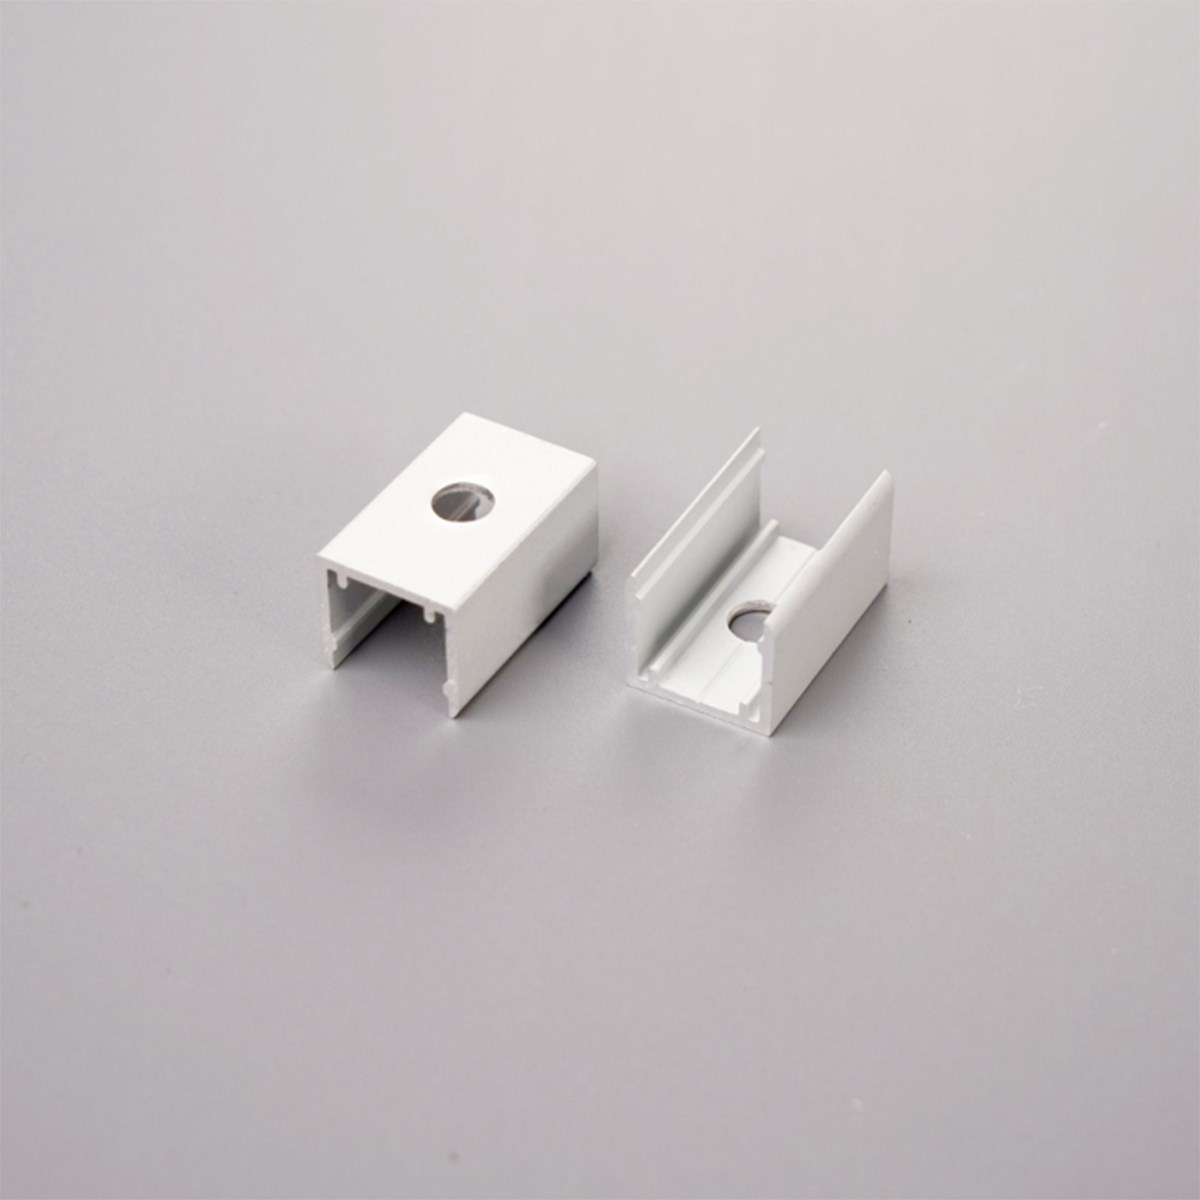 10 pieces fixing clips + 10 pieces screws